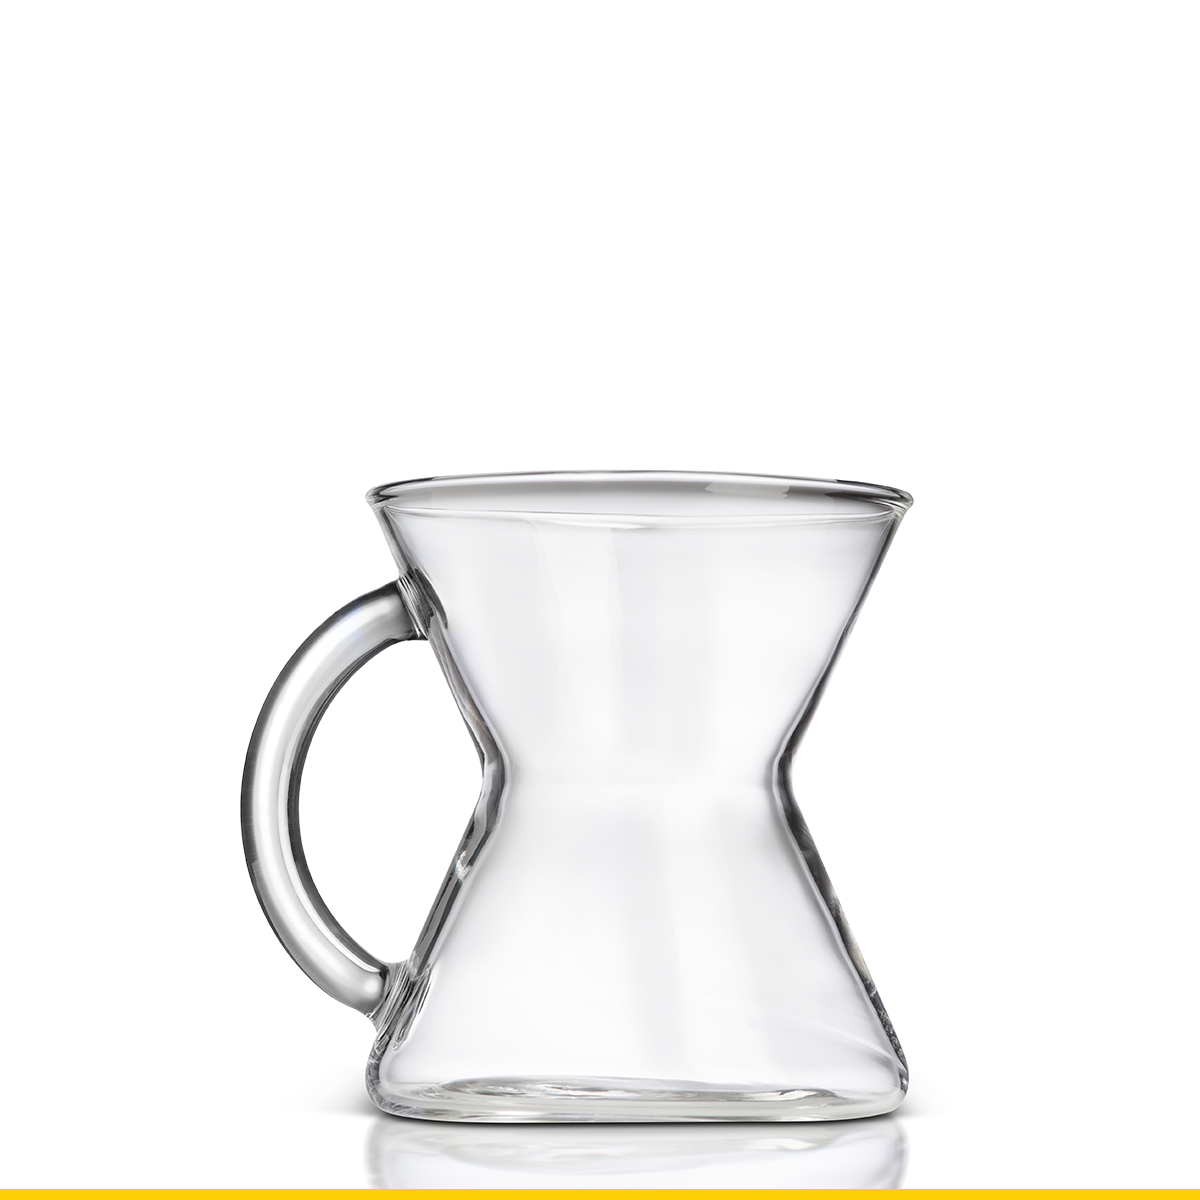 https://store.chemexcoffeemaker.com/media/catalog/product/c/h/chemex-glass-mug-1_1.png